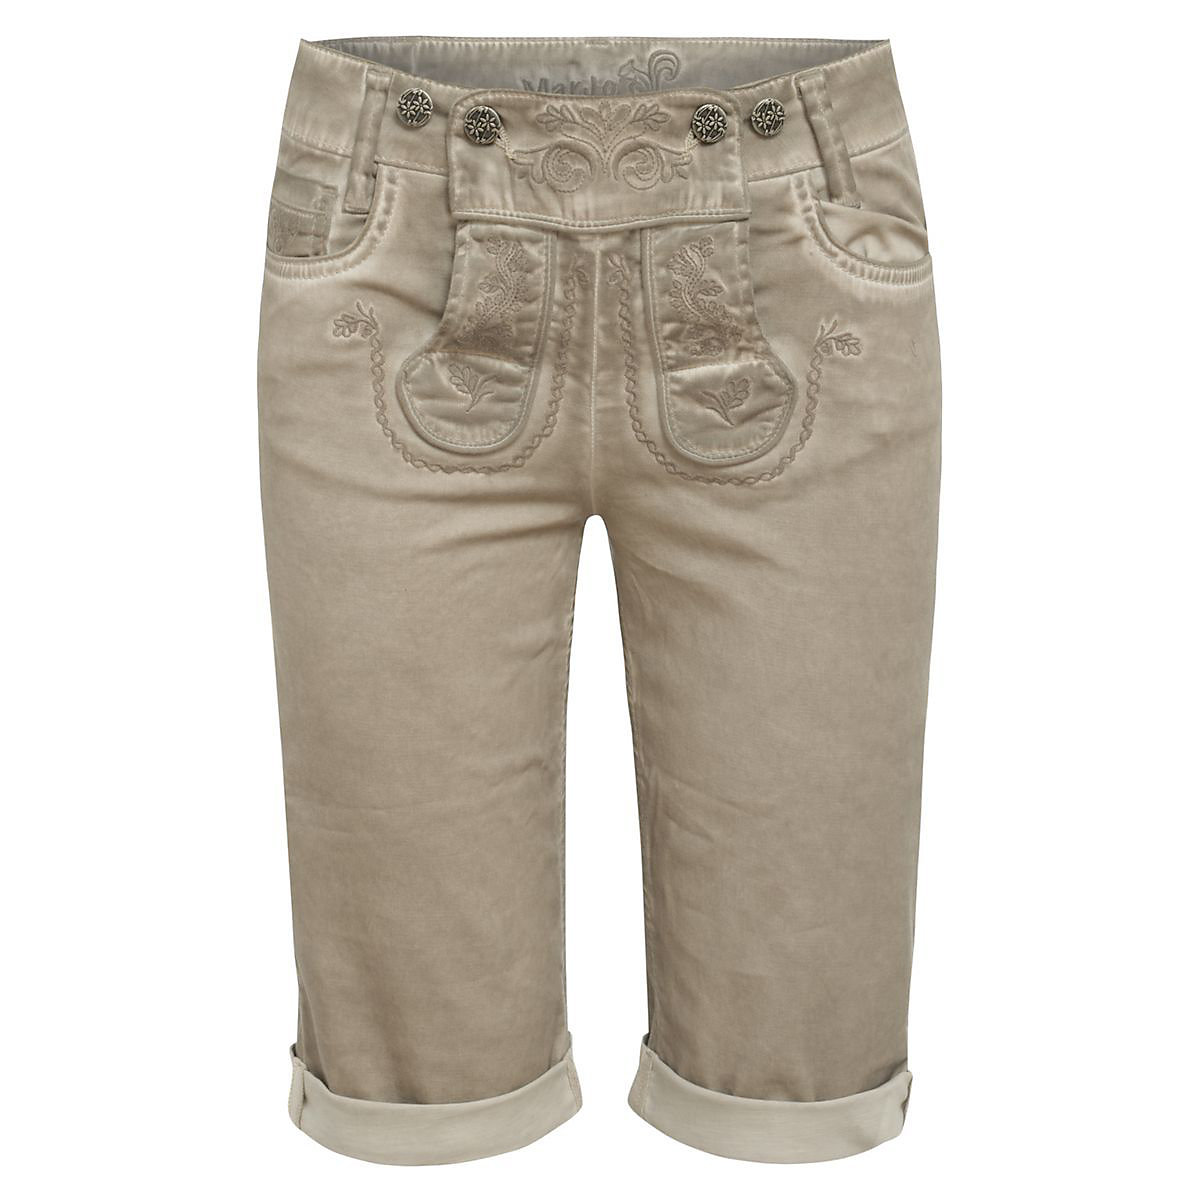 MarJo Jeans-Lederhose Shorts grau